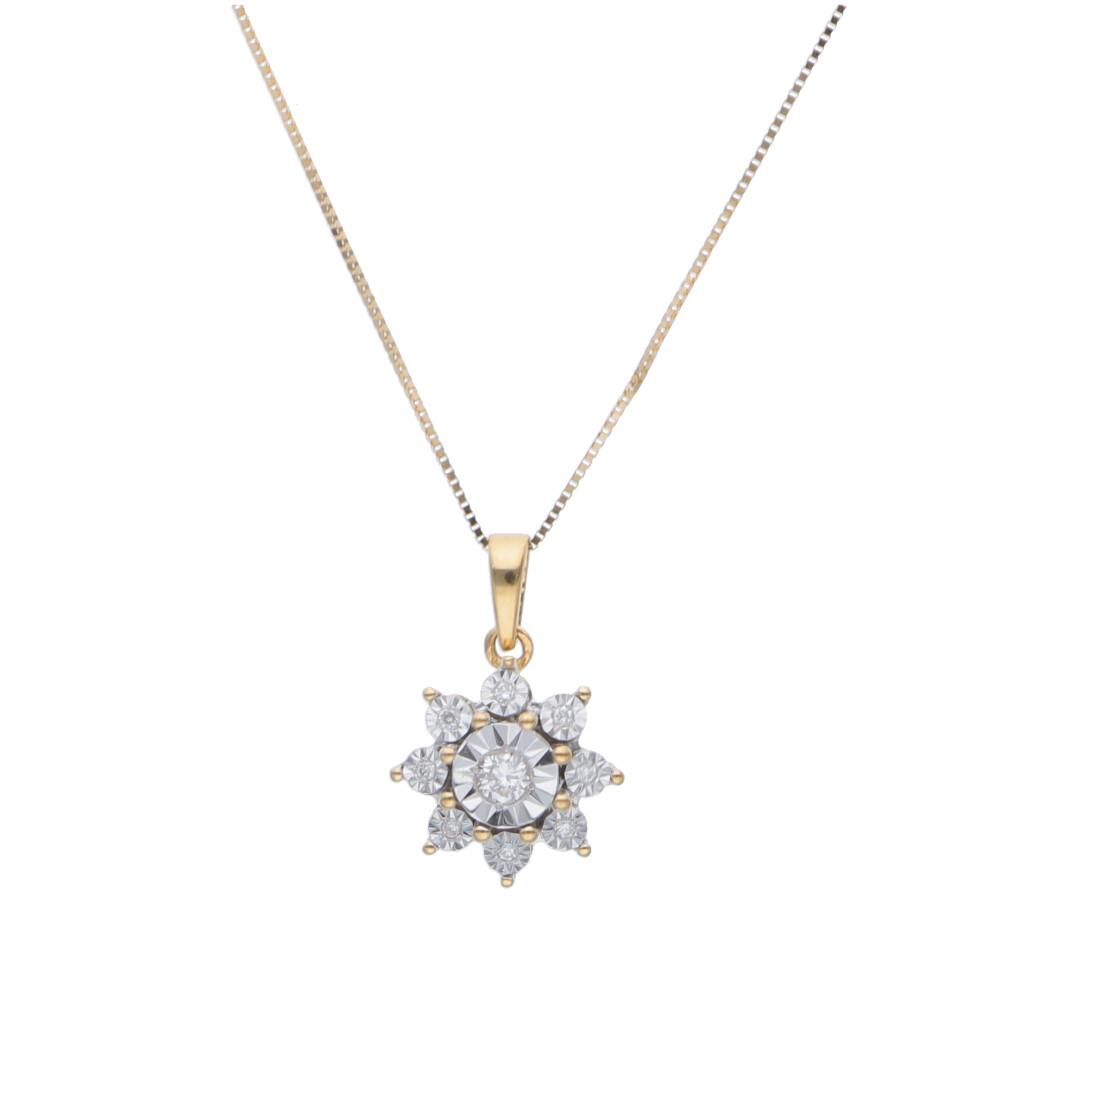 Necklace with diamond pendant - ORO&CO